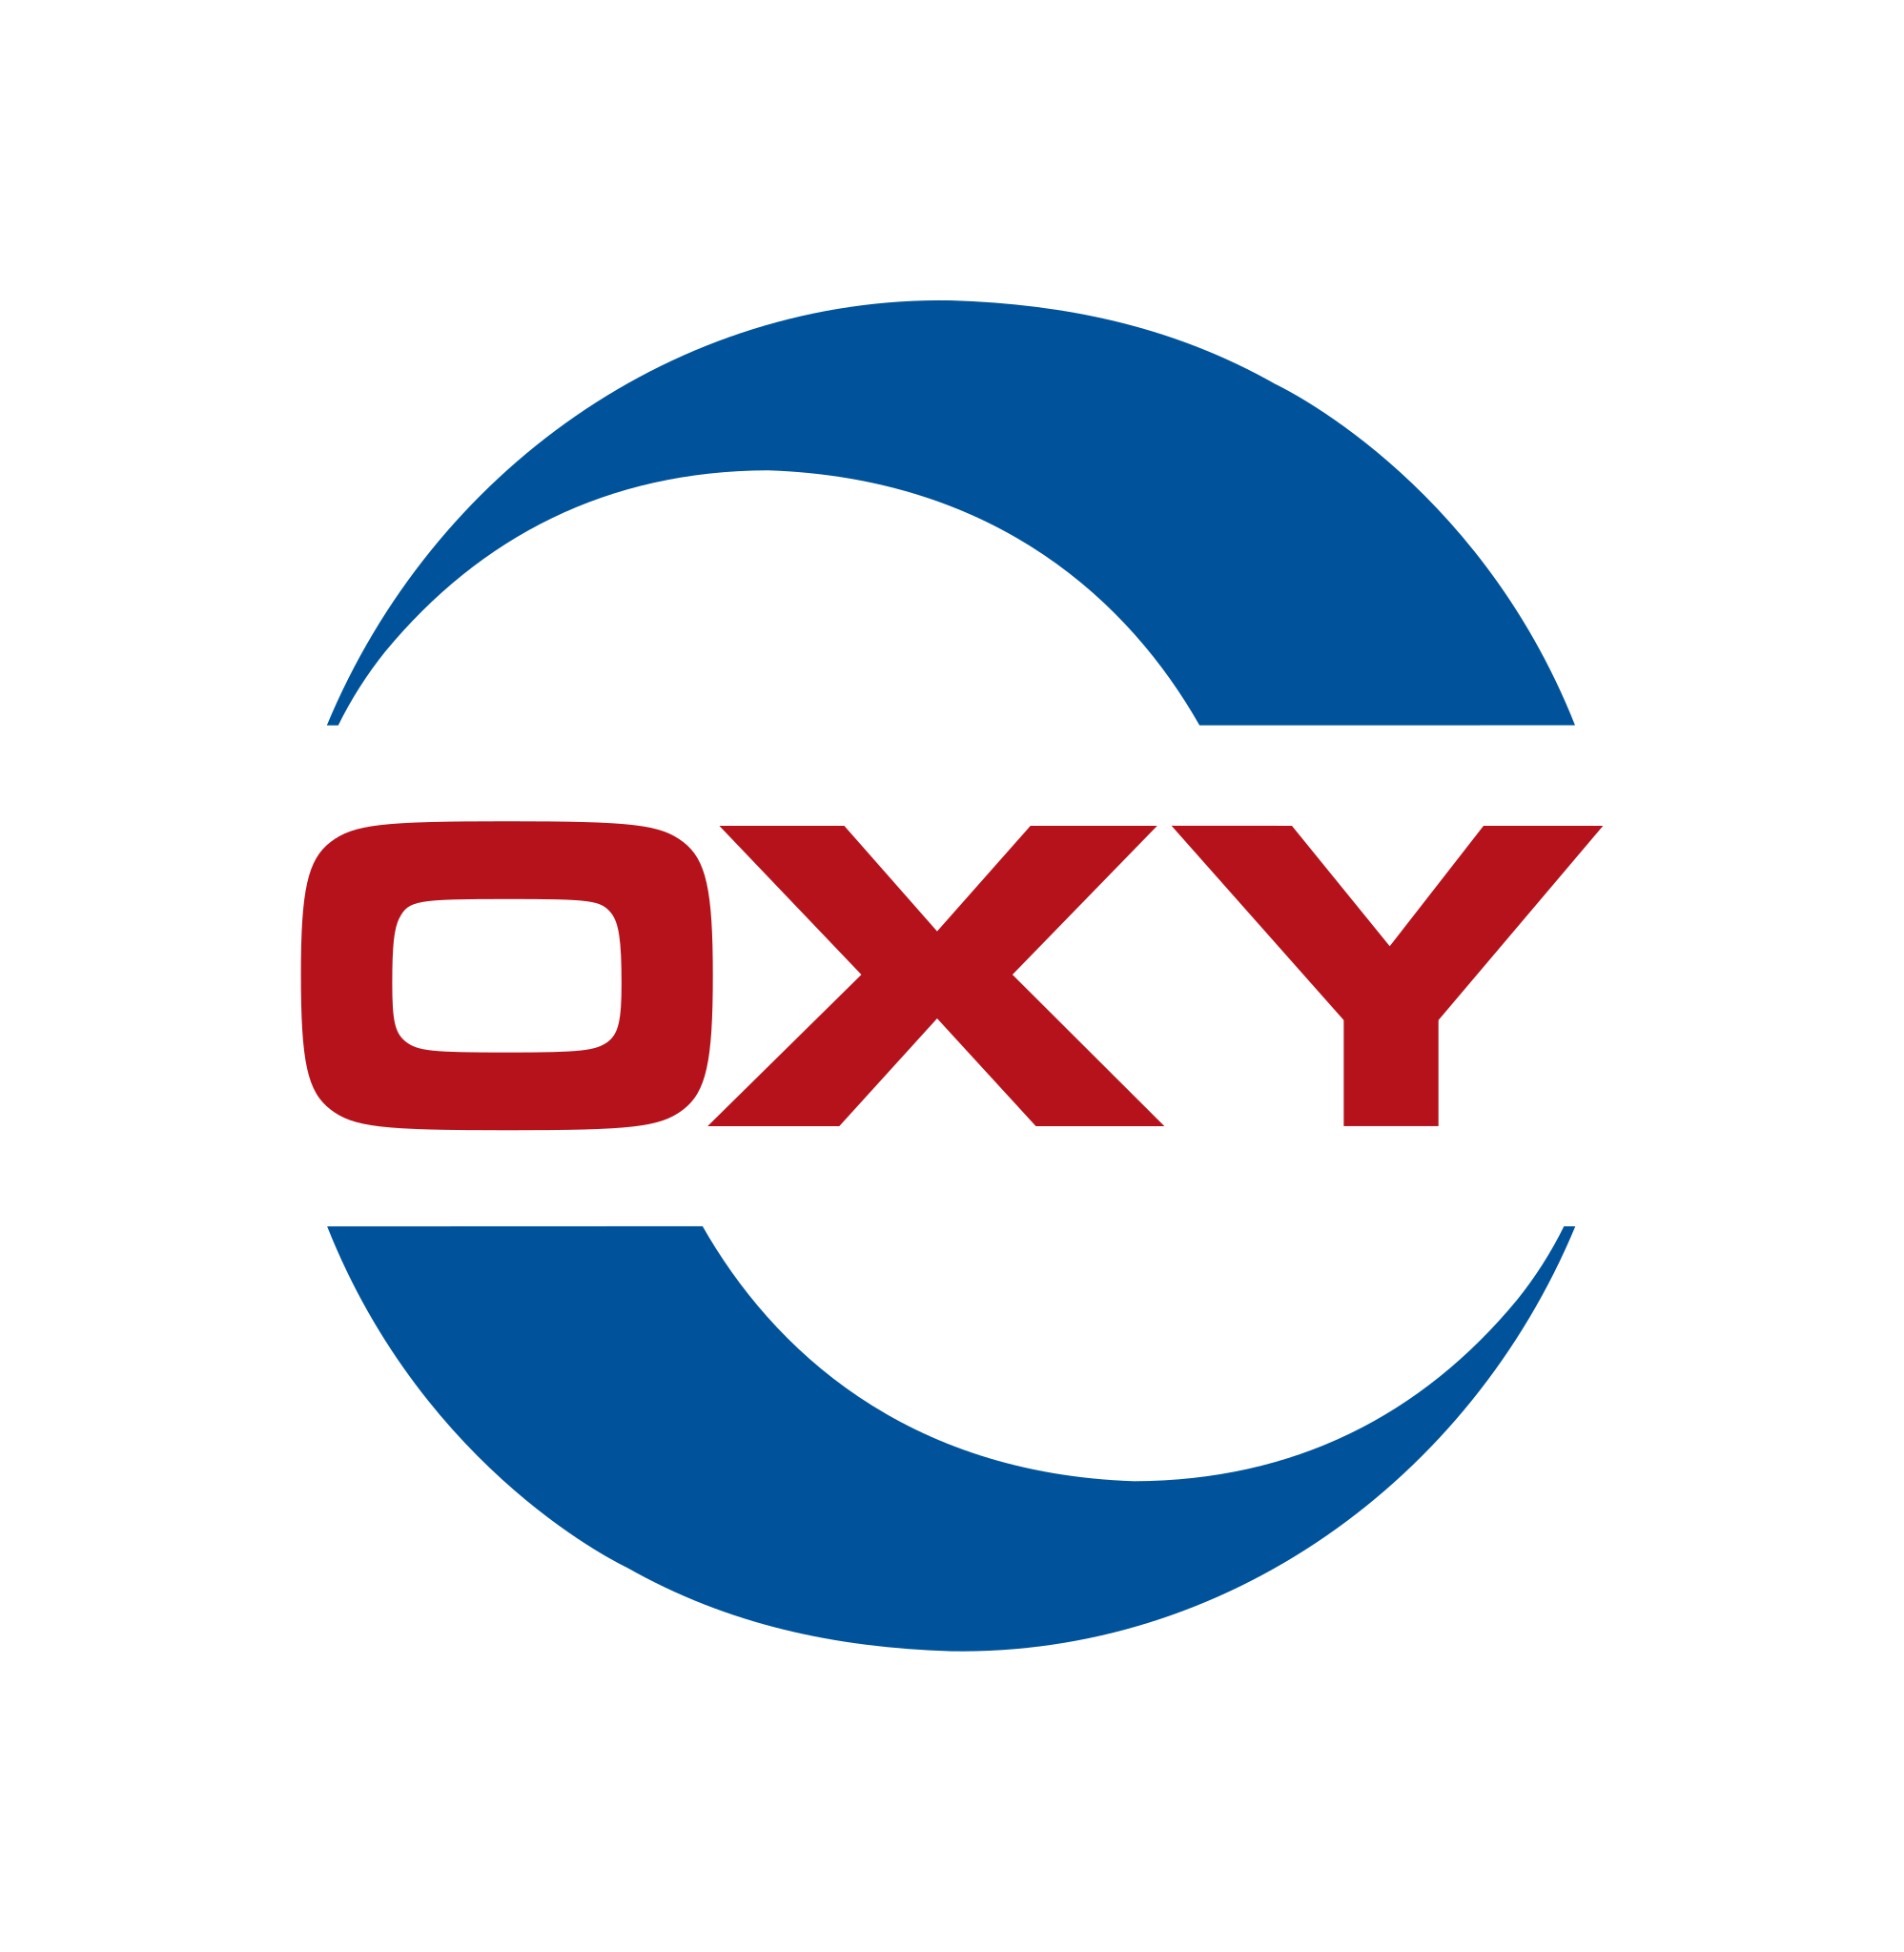 Occidental Petroleum Corporation (Oxy)